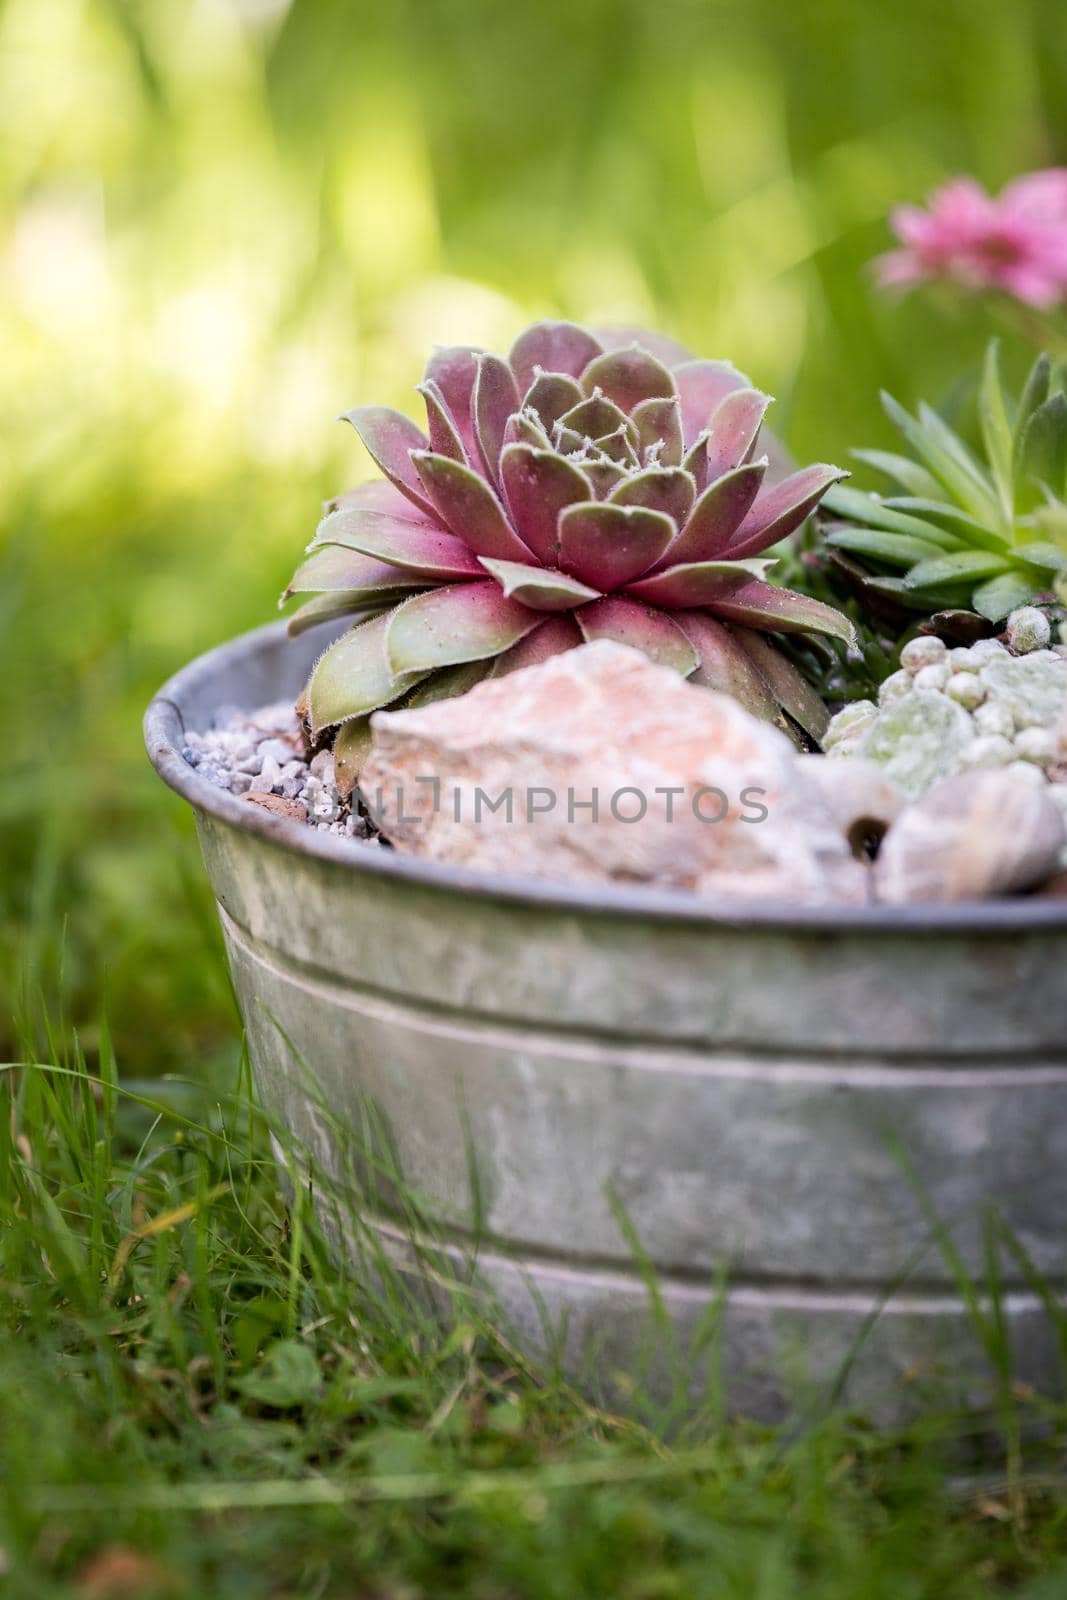 Common houseleek in a flowerpot, defocused blurry background